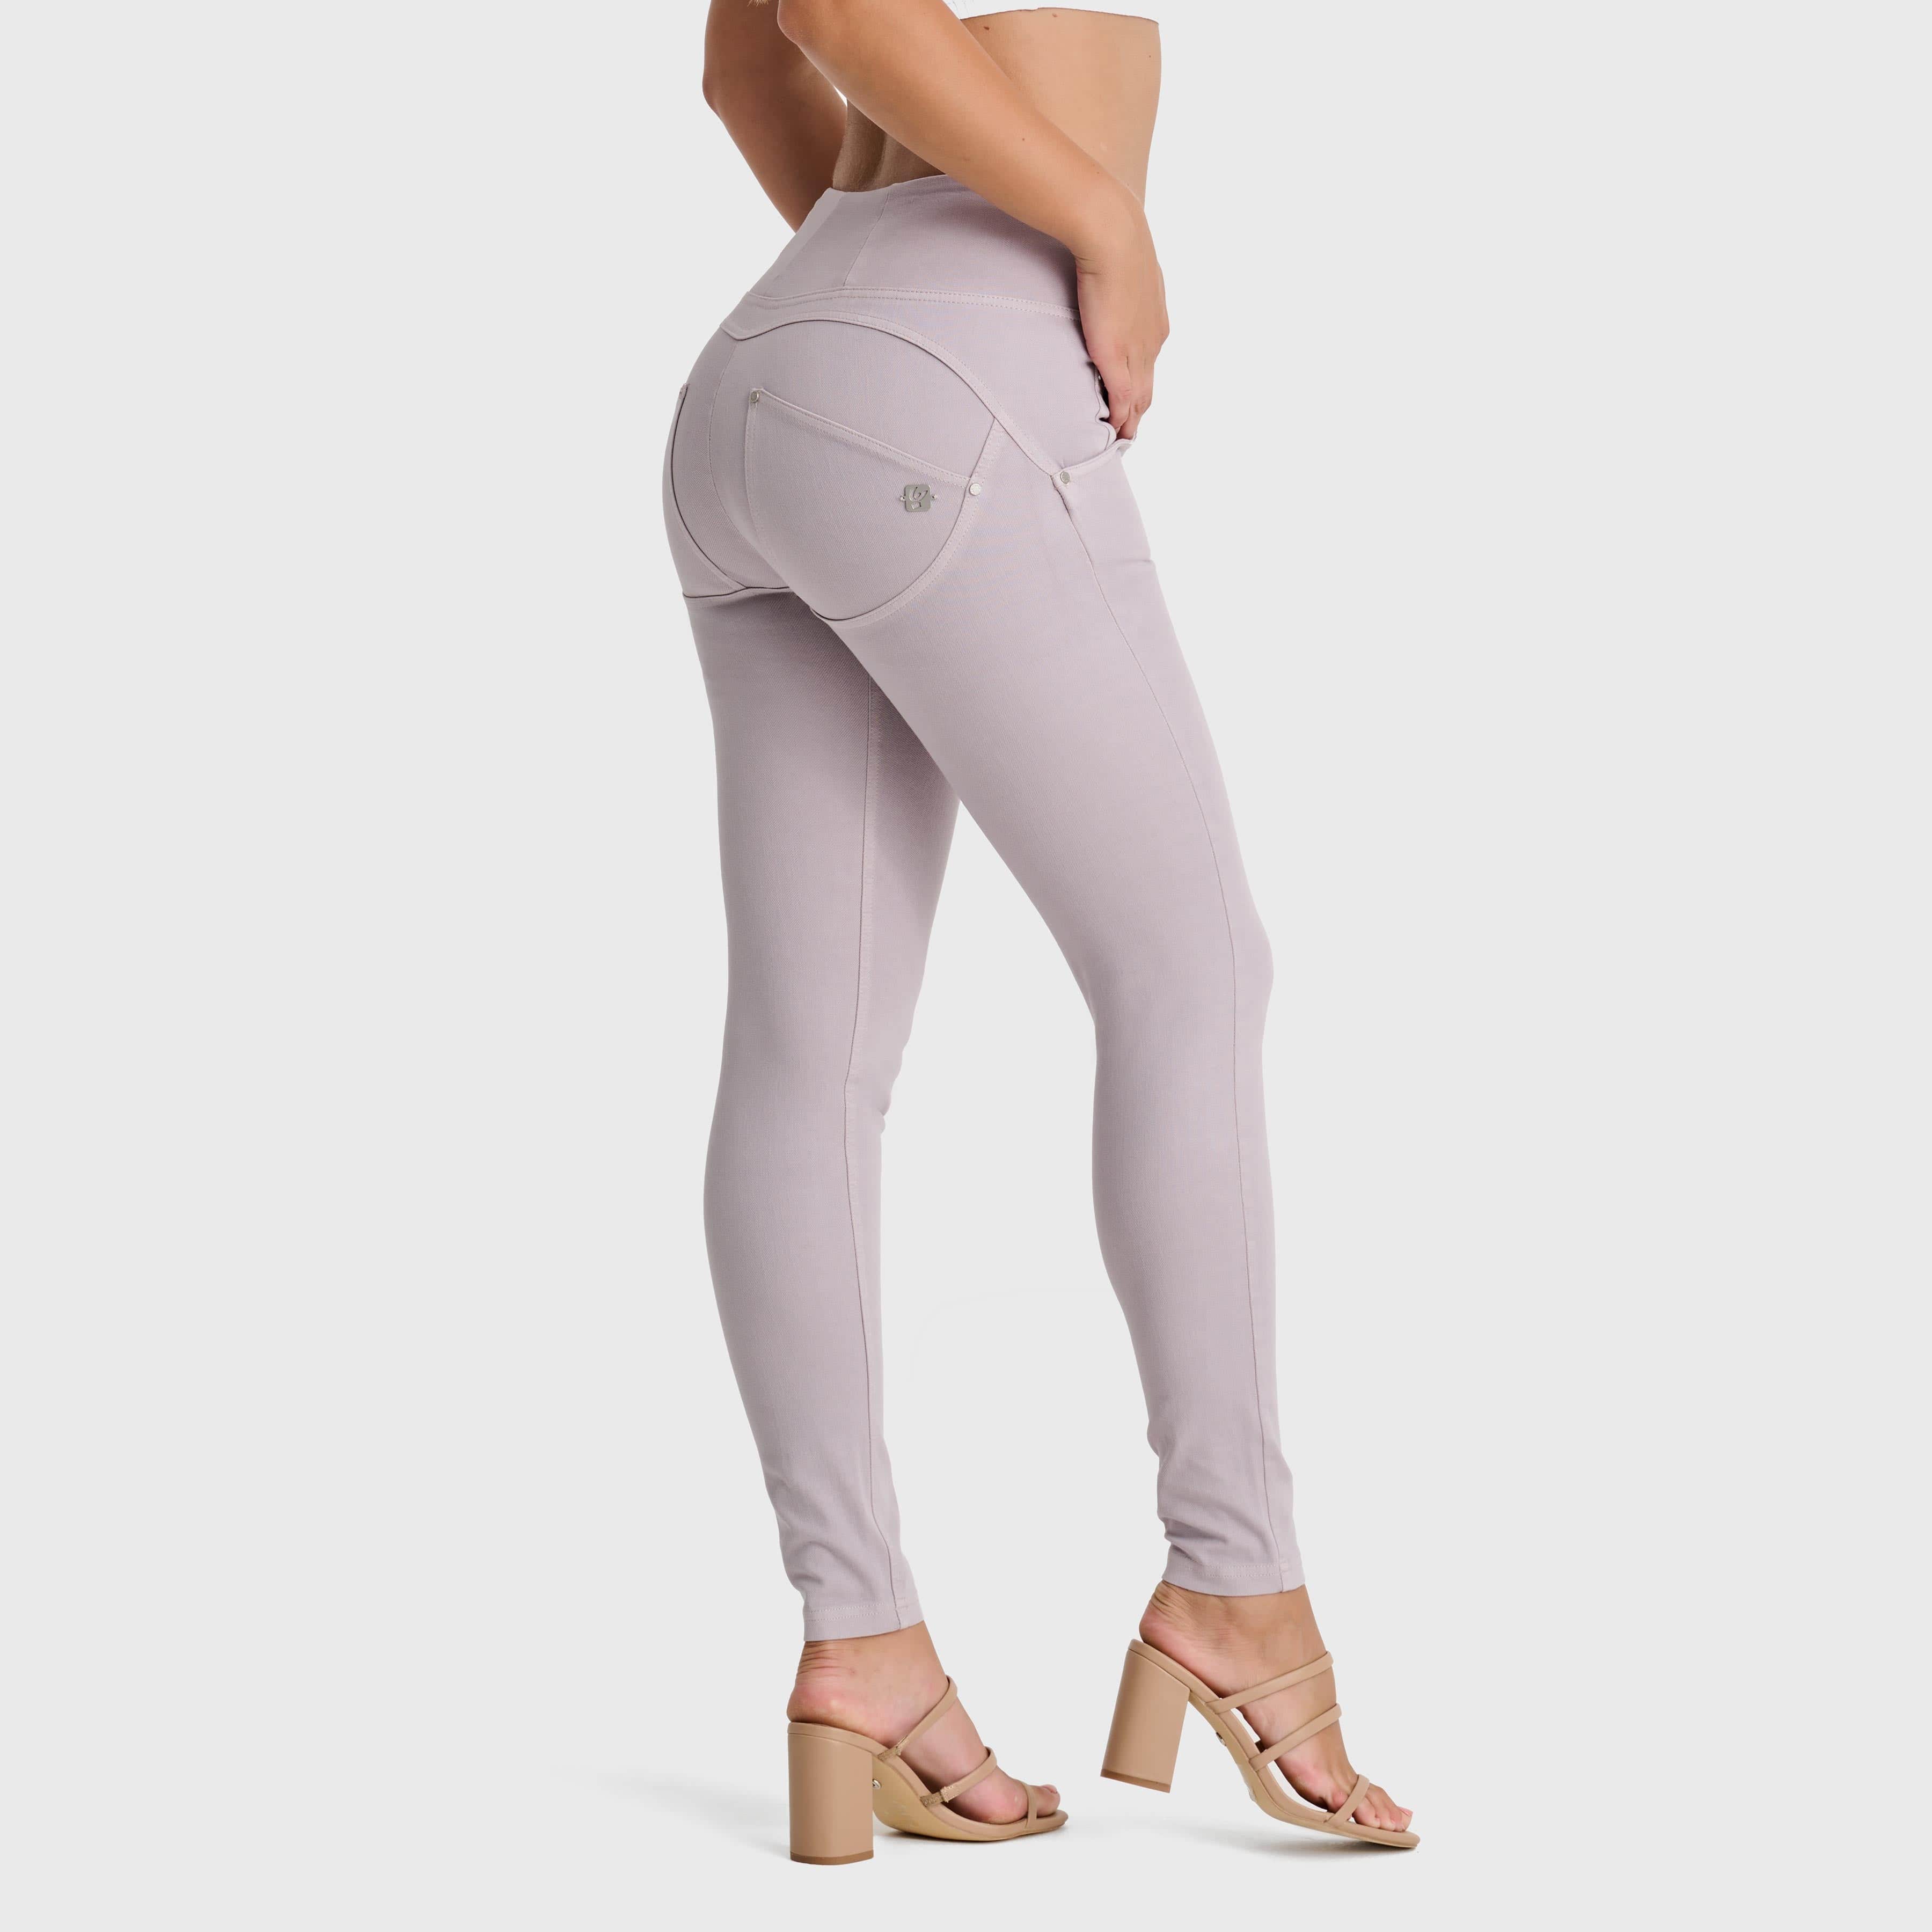 WR.UP® Snug Jeans - High Waisted - Full Length - Light Grey 1